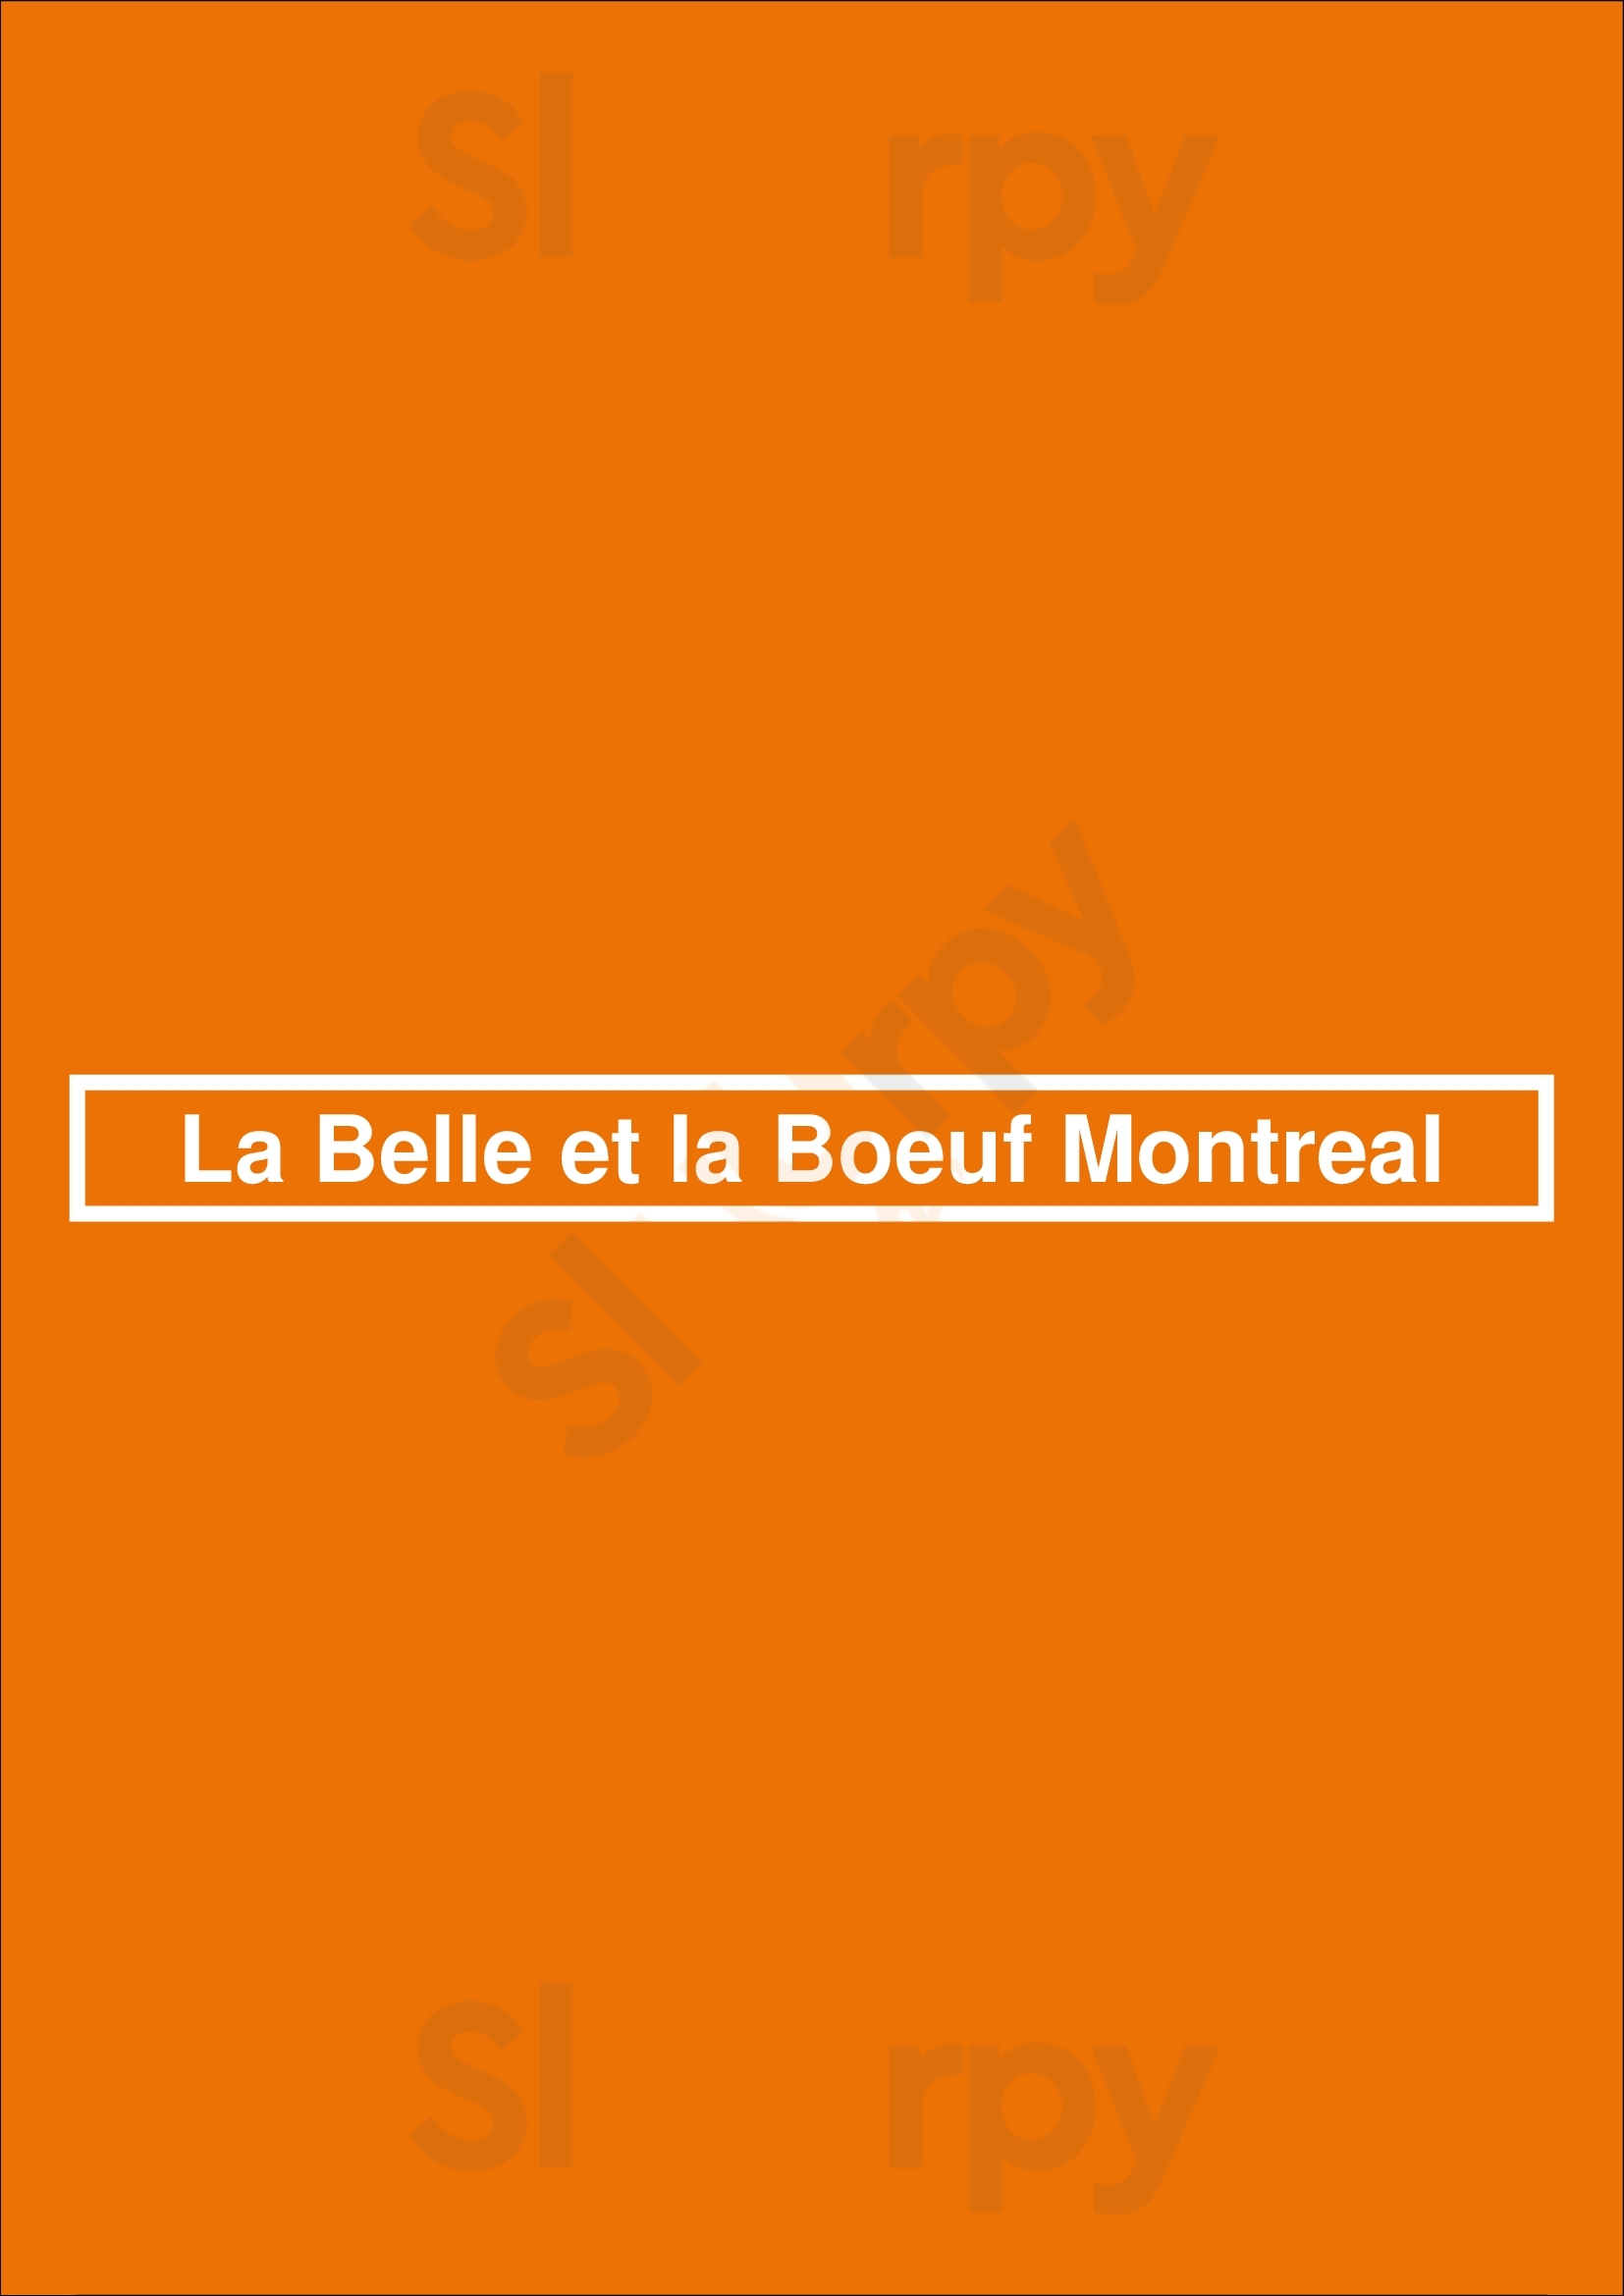 La Belle Et La Boeuf Montreal Montreal Menu - 1